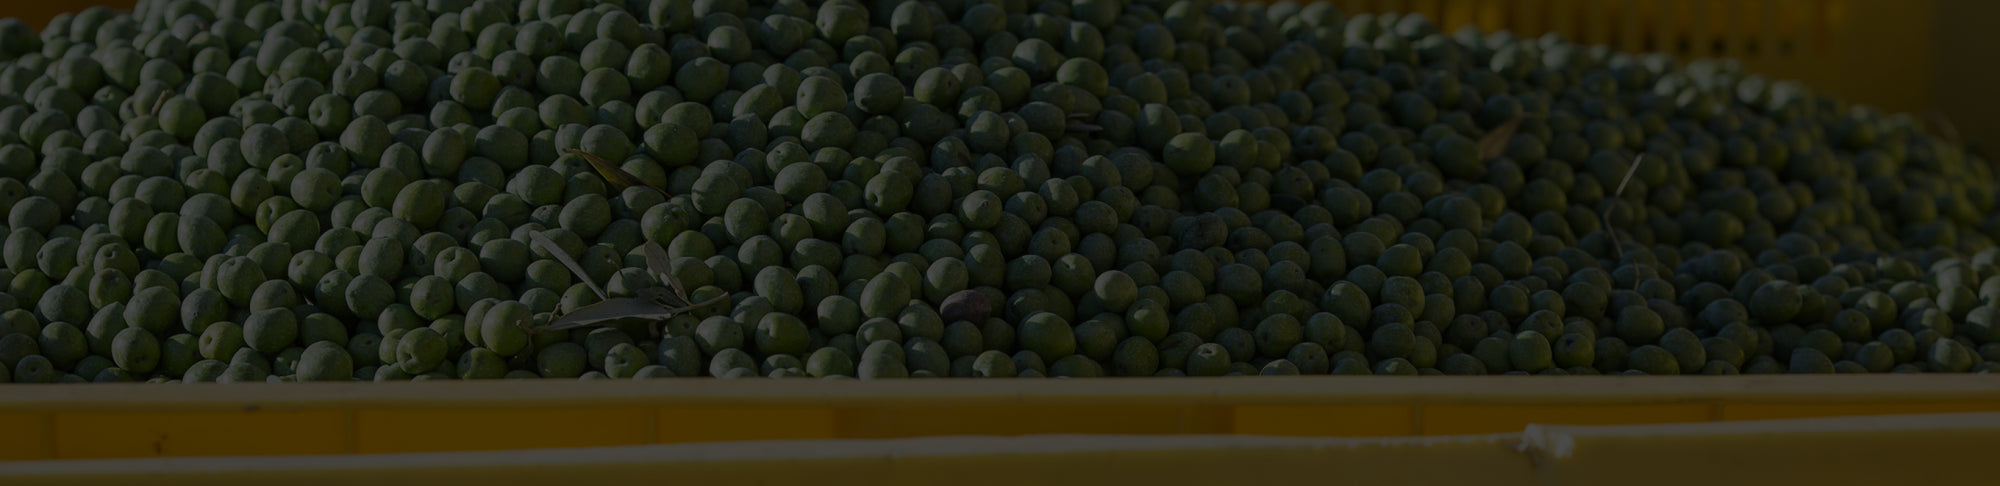 decorative background of partanna olives